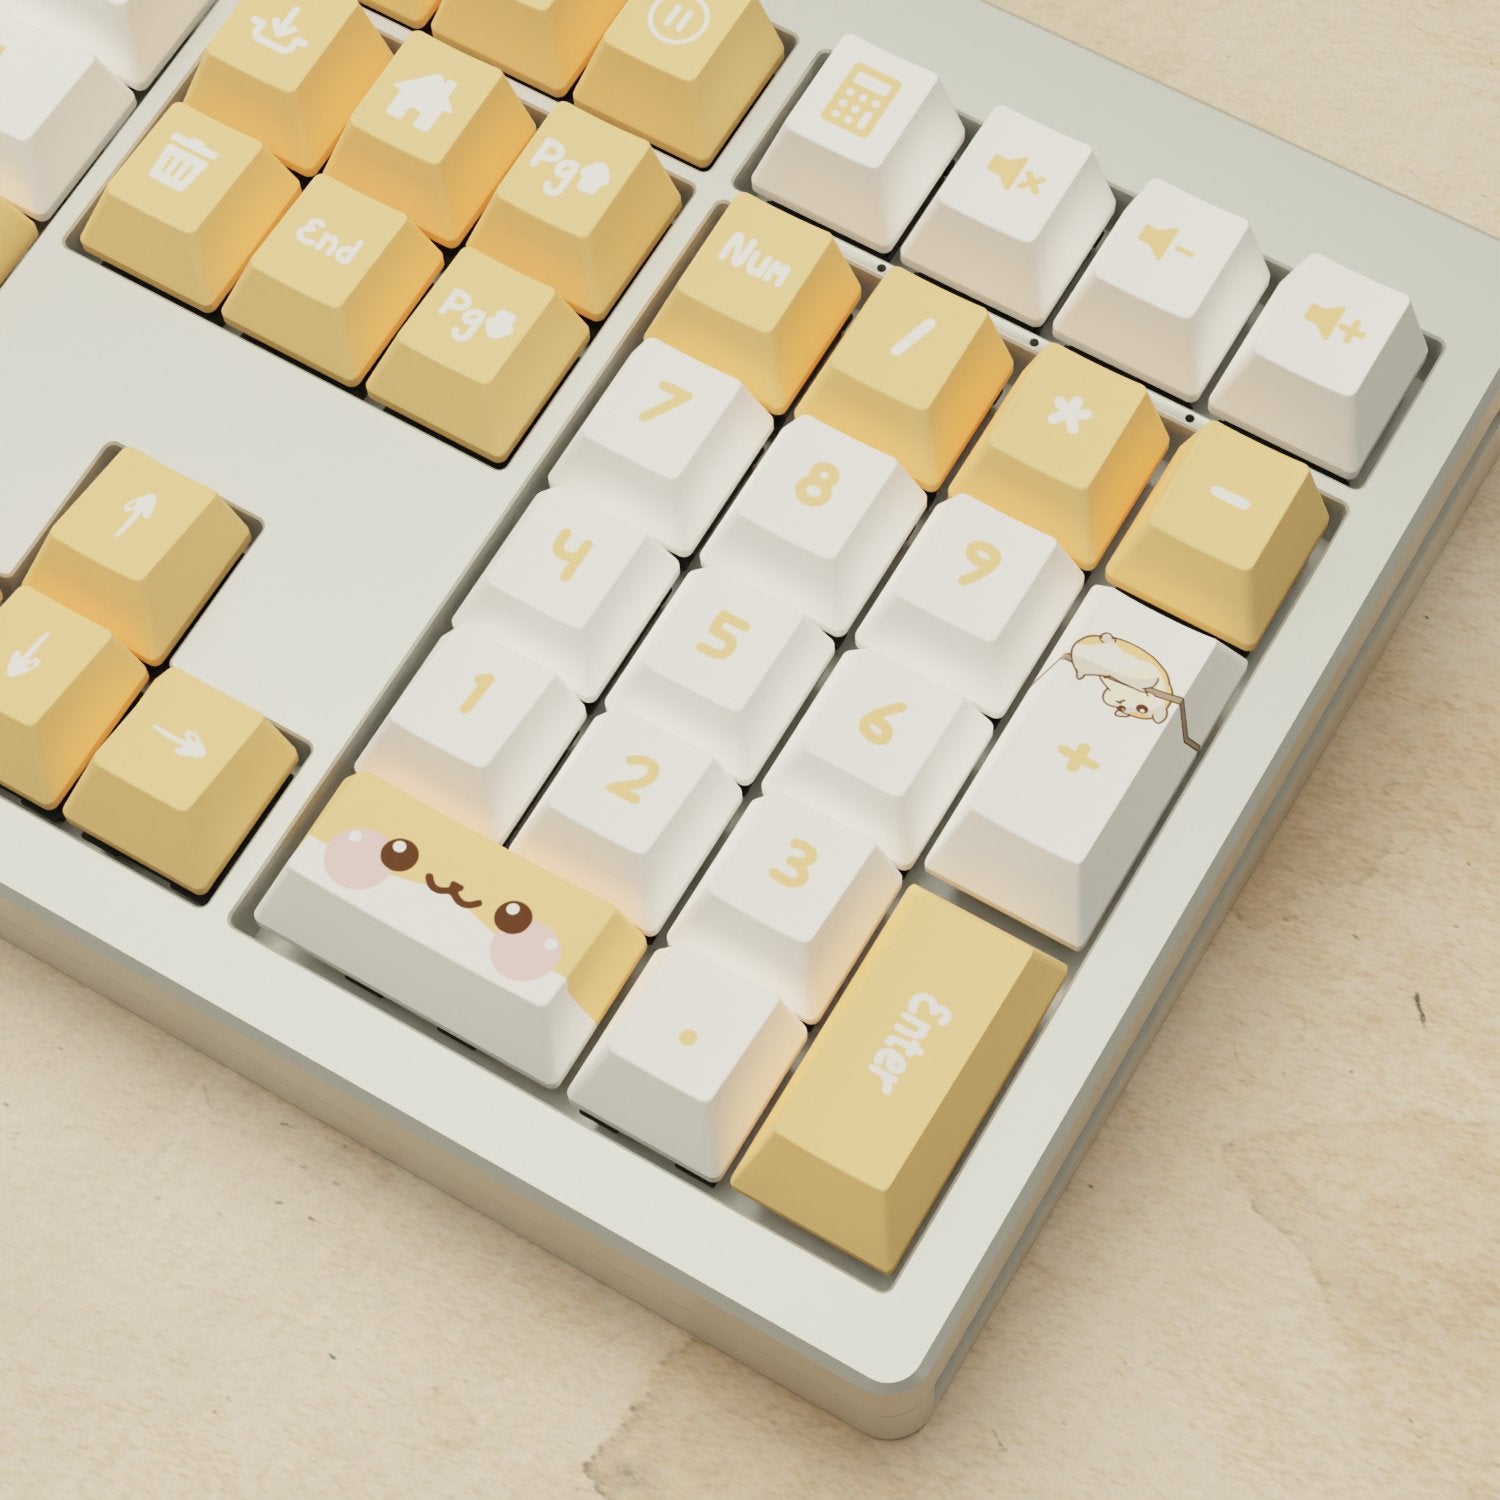 Monsgeek M5 - 100% Hamster Mechanical Keyboard - Goblintechkeys